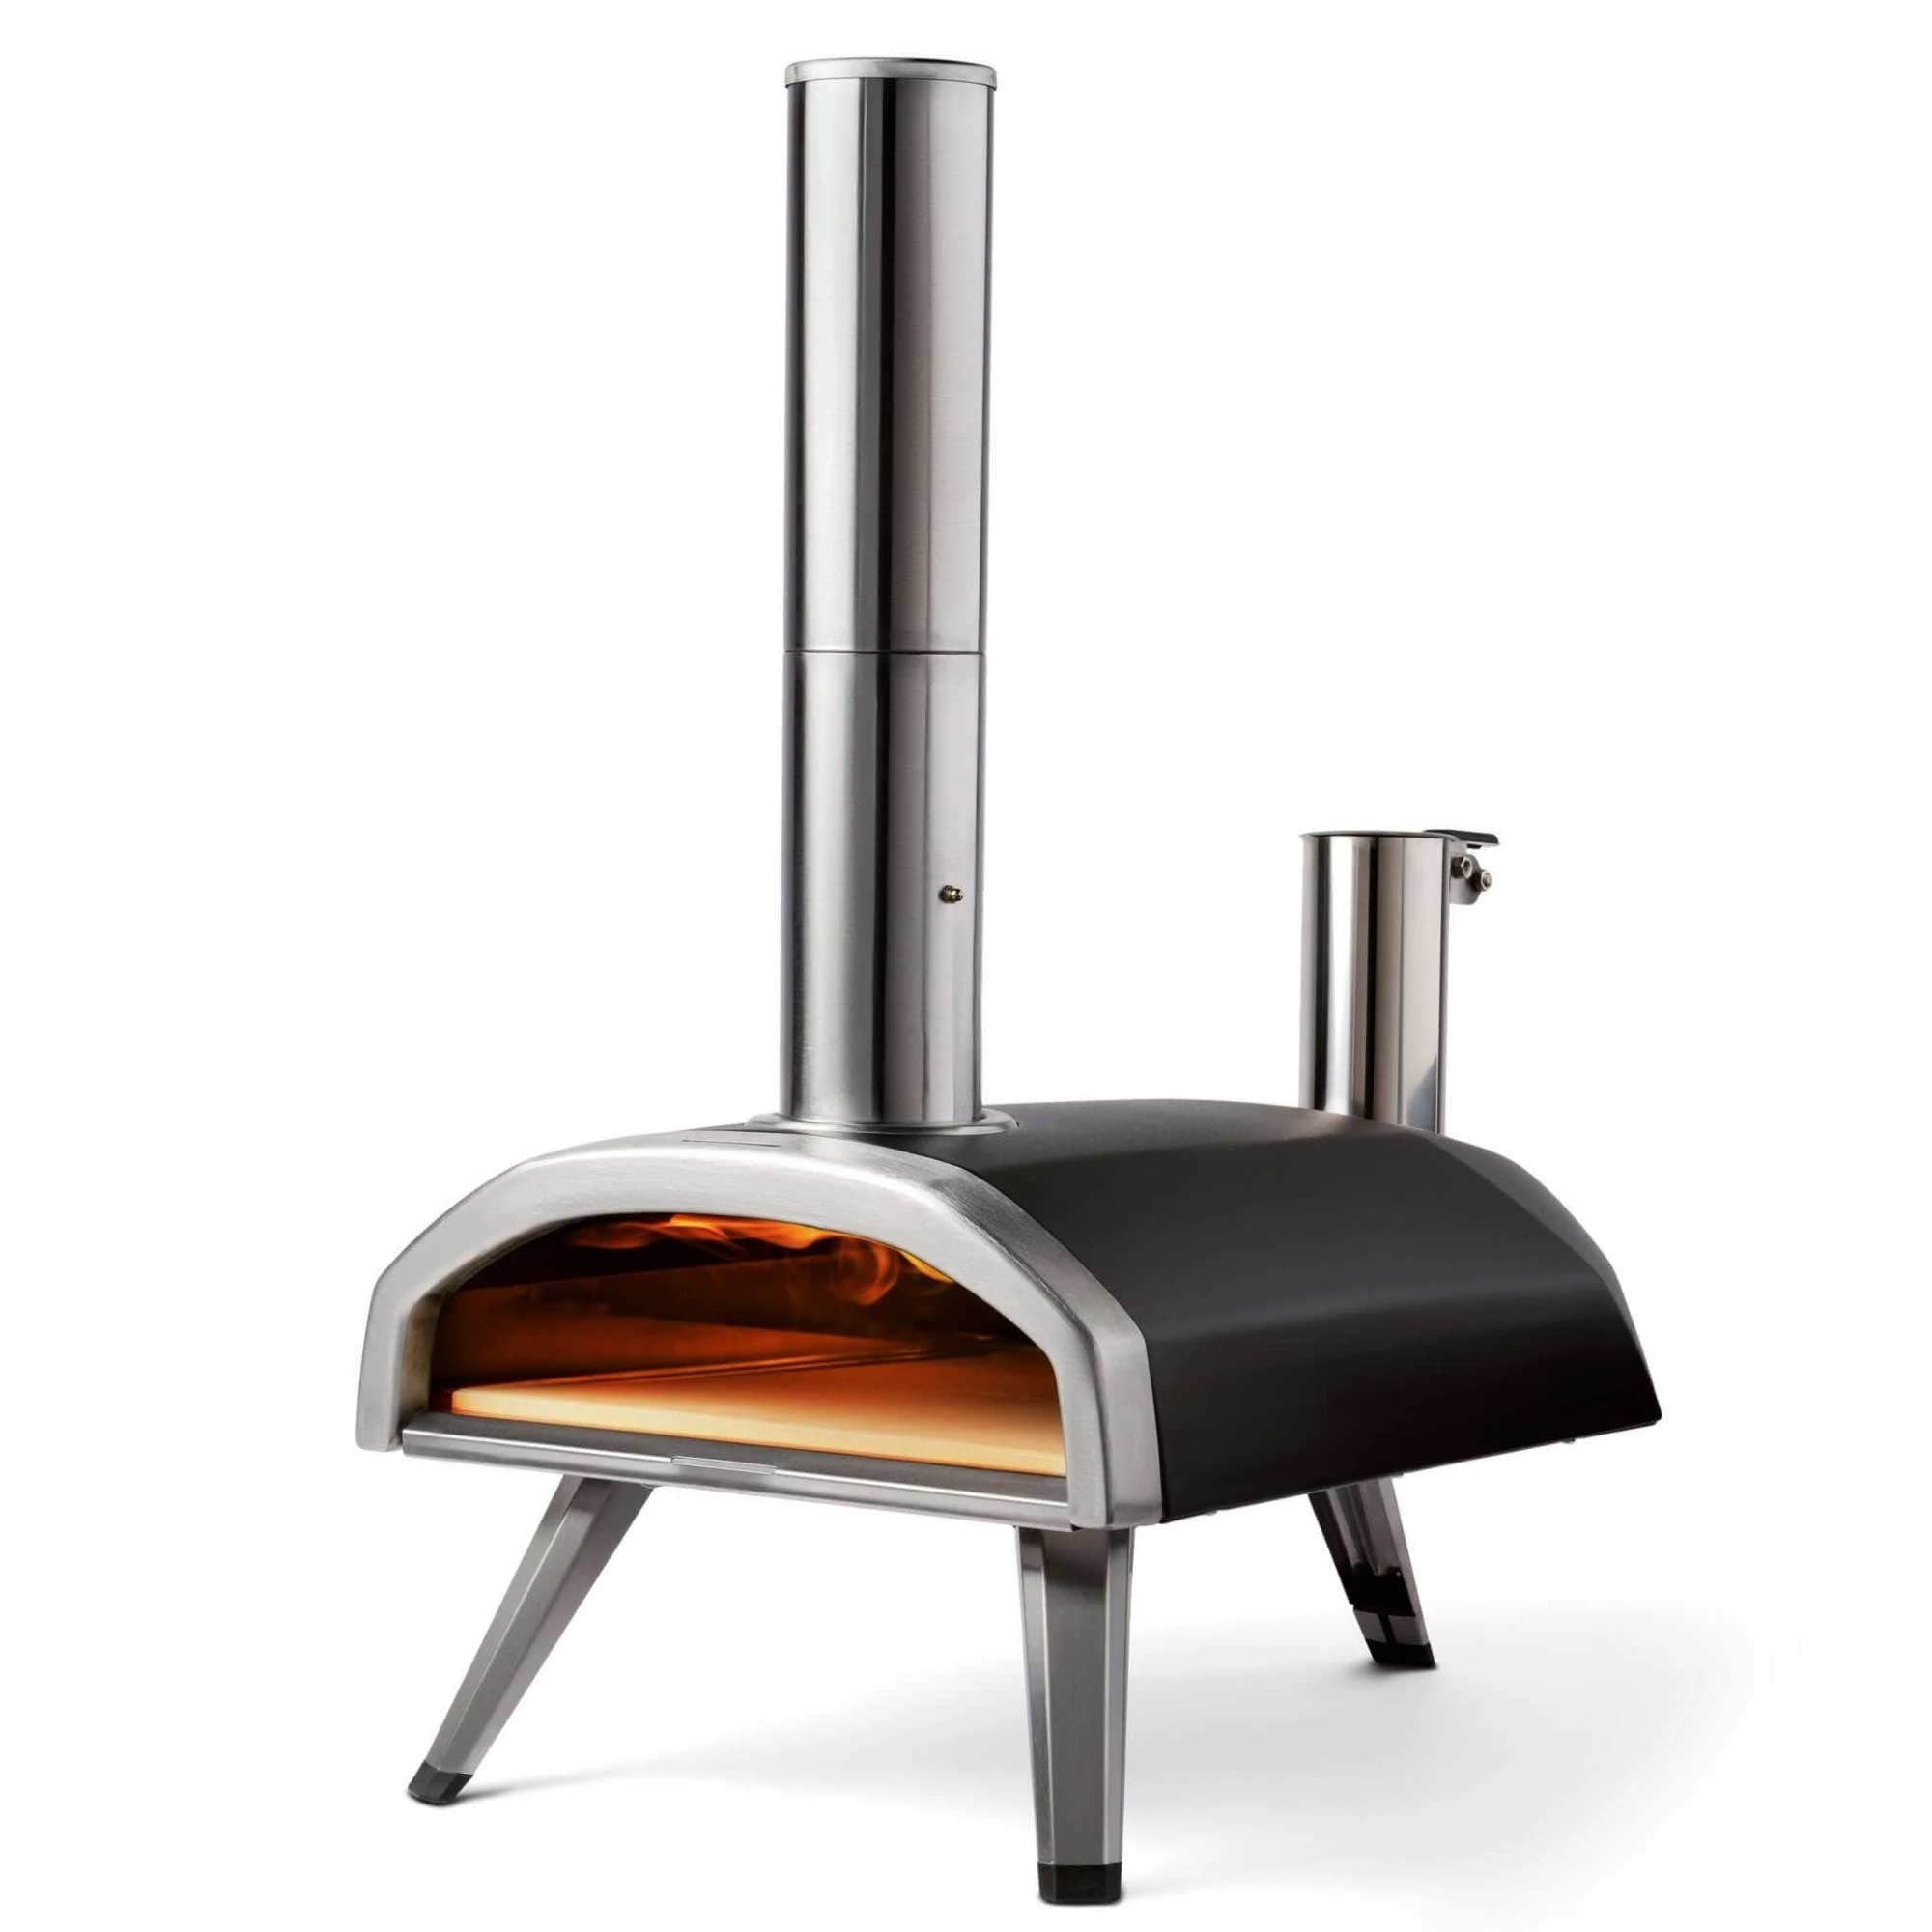 Oven Pizza Ooni Fyra portable wood-burning Pellet, Pizza Ovens